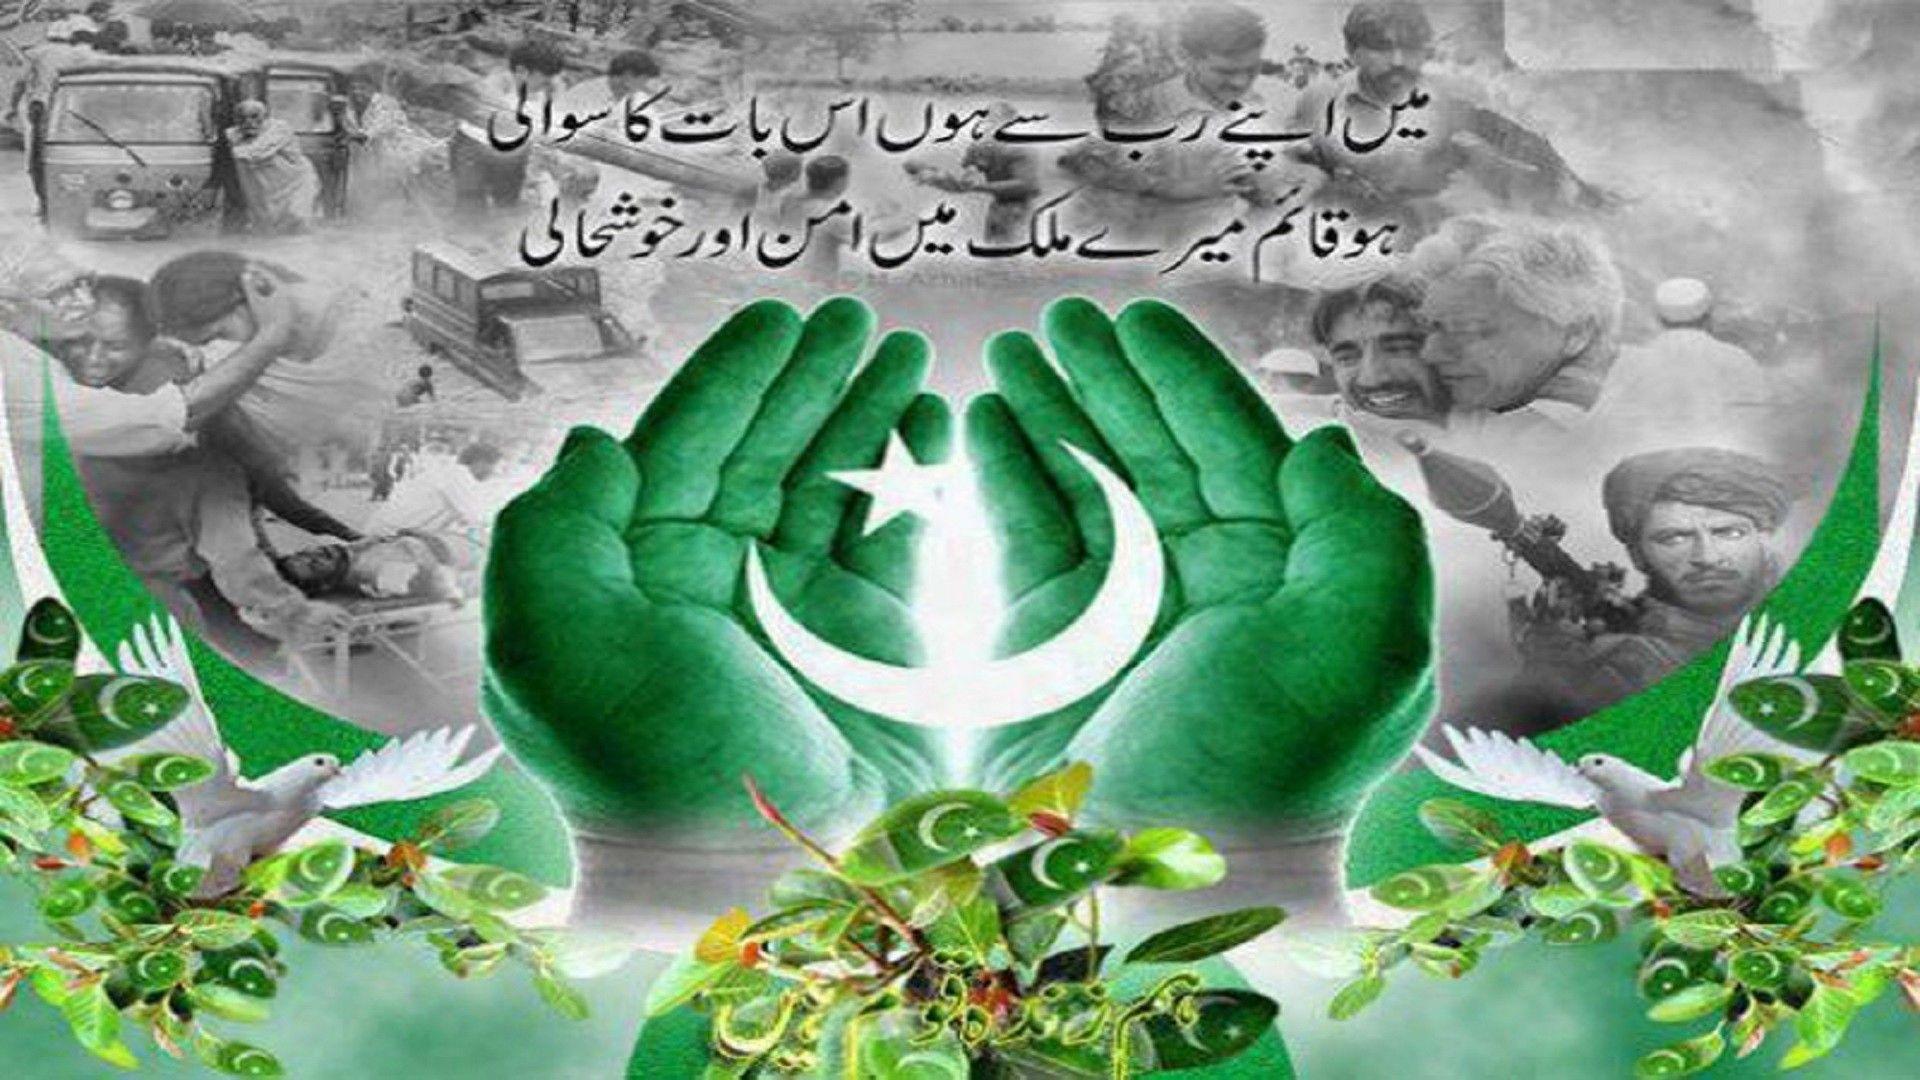 Pakistan Flag Wallpaper Free Download. (33++ Wallpaper)